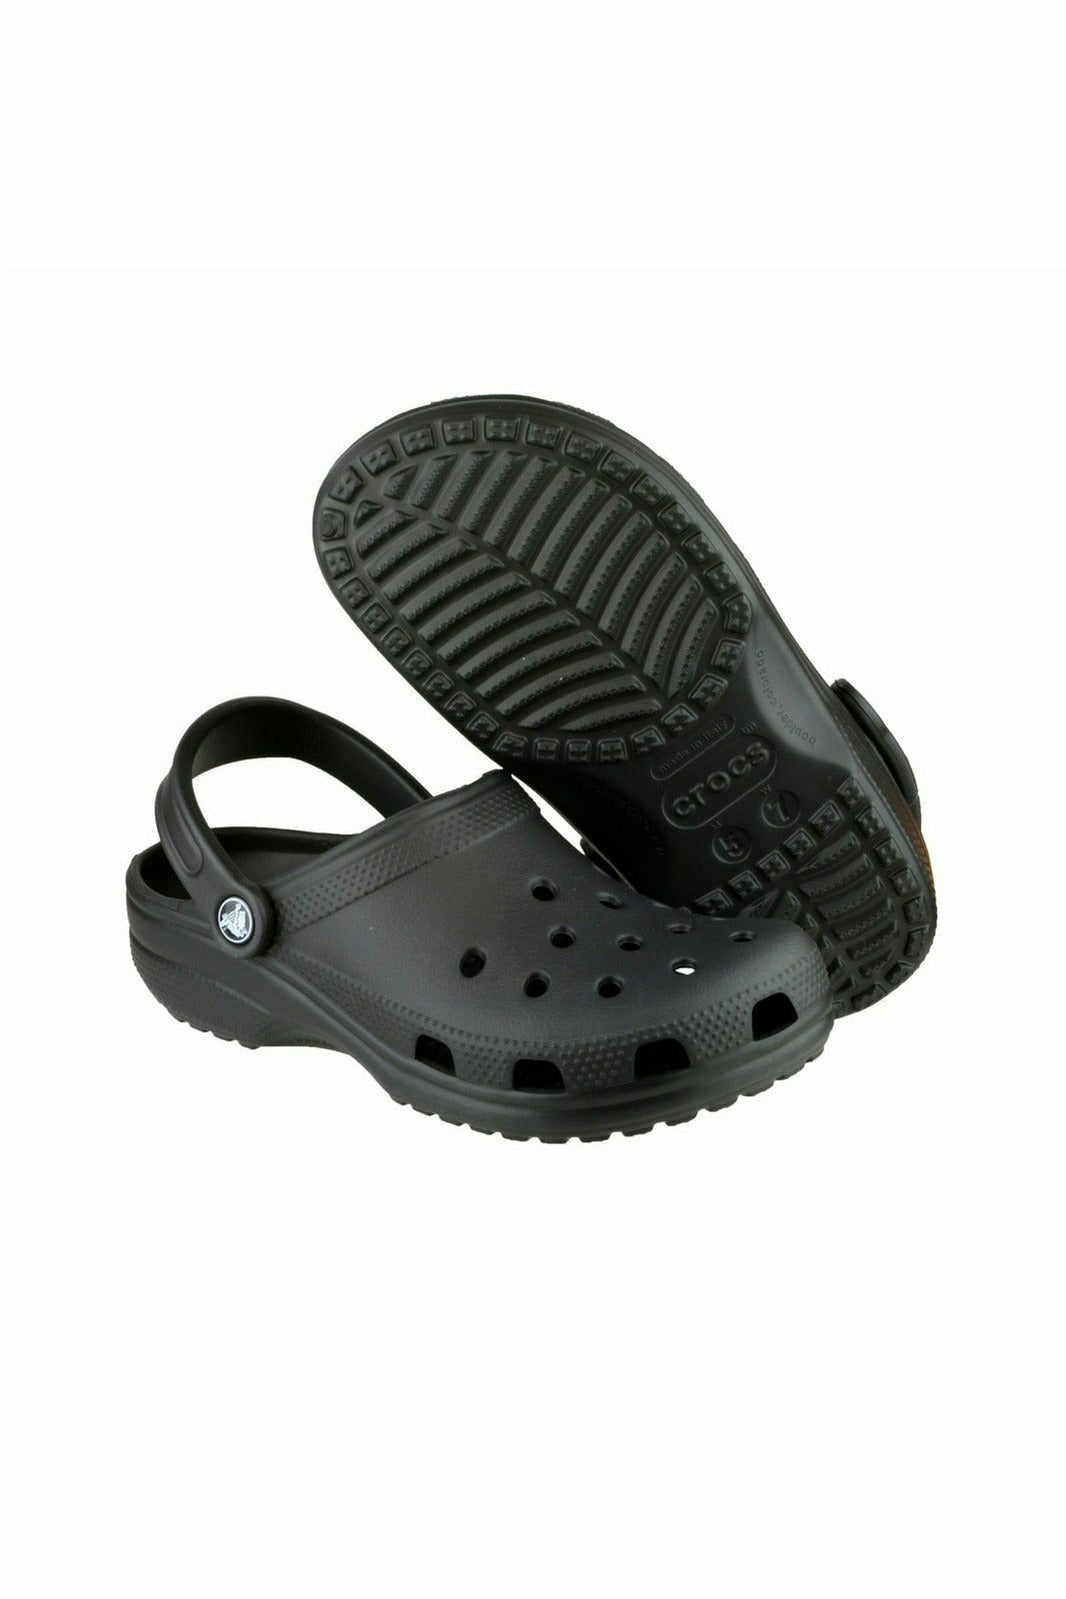 Crocs Classic Clog Black 10001 Unisex